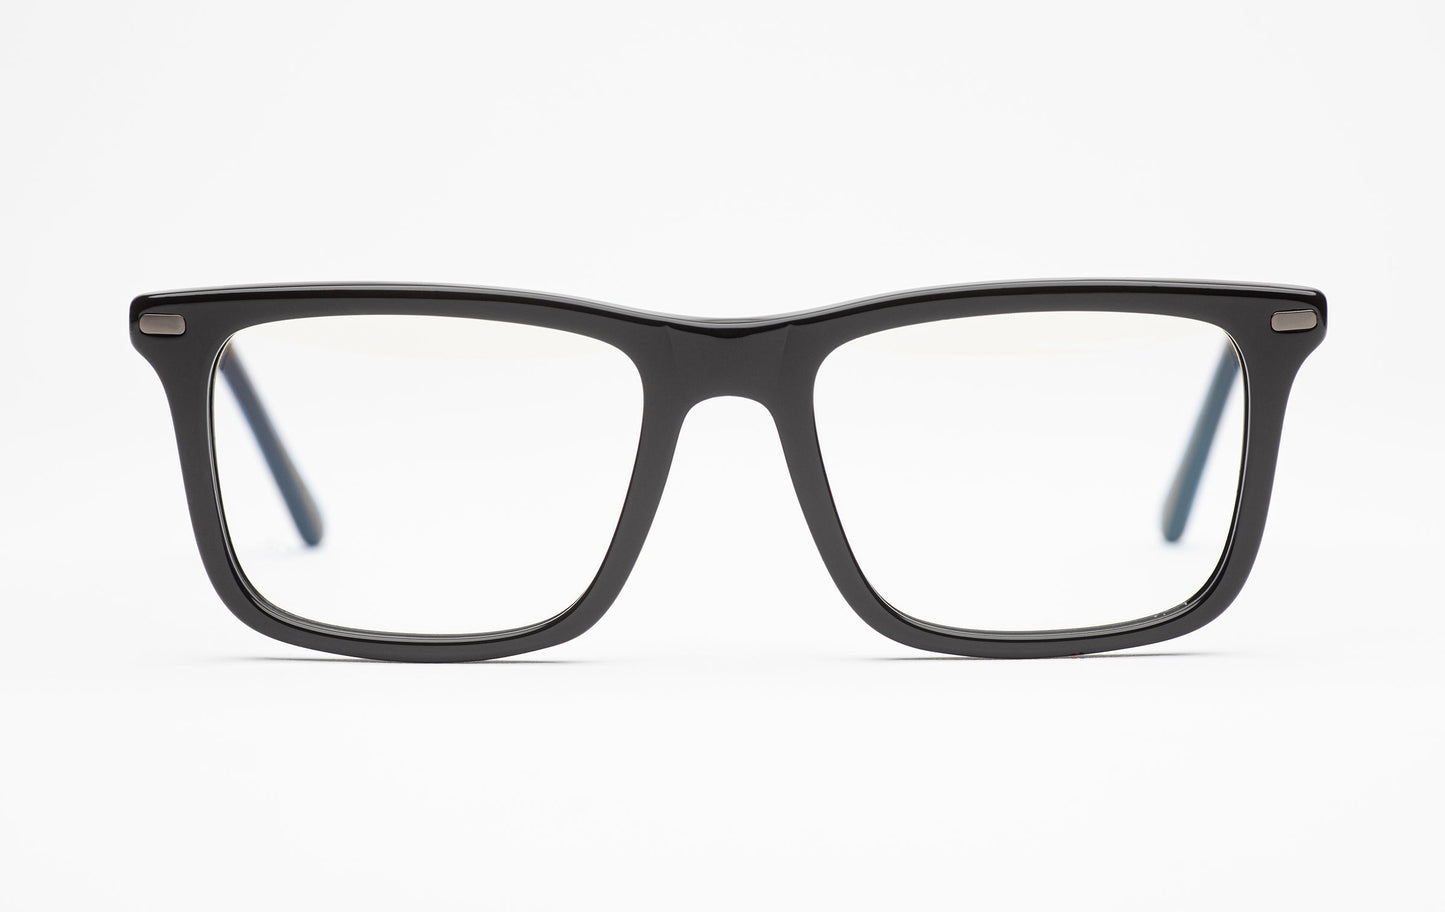 The Director 2 | Black Frame Glasses - Designer Prescription Glasses with Oversized Rectangular Frames 